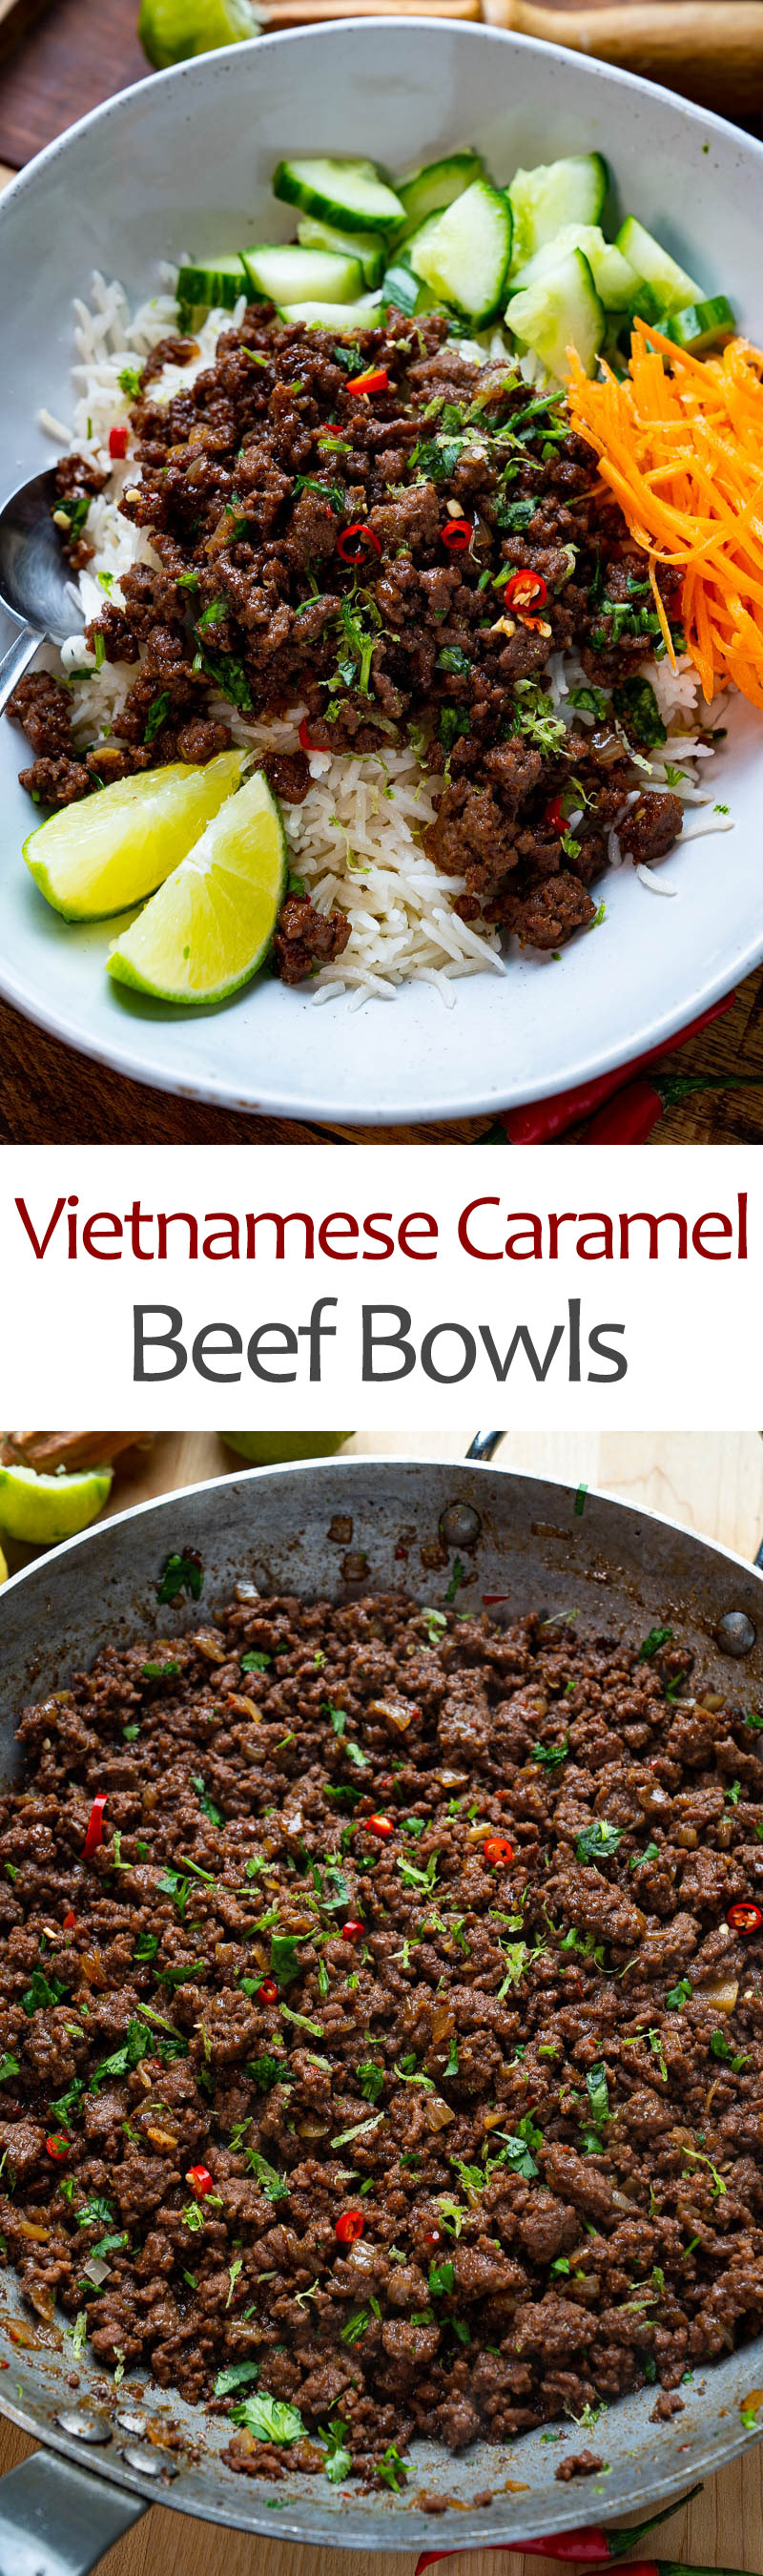 20 Minute Vietnamese Caramel Beef